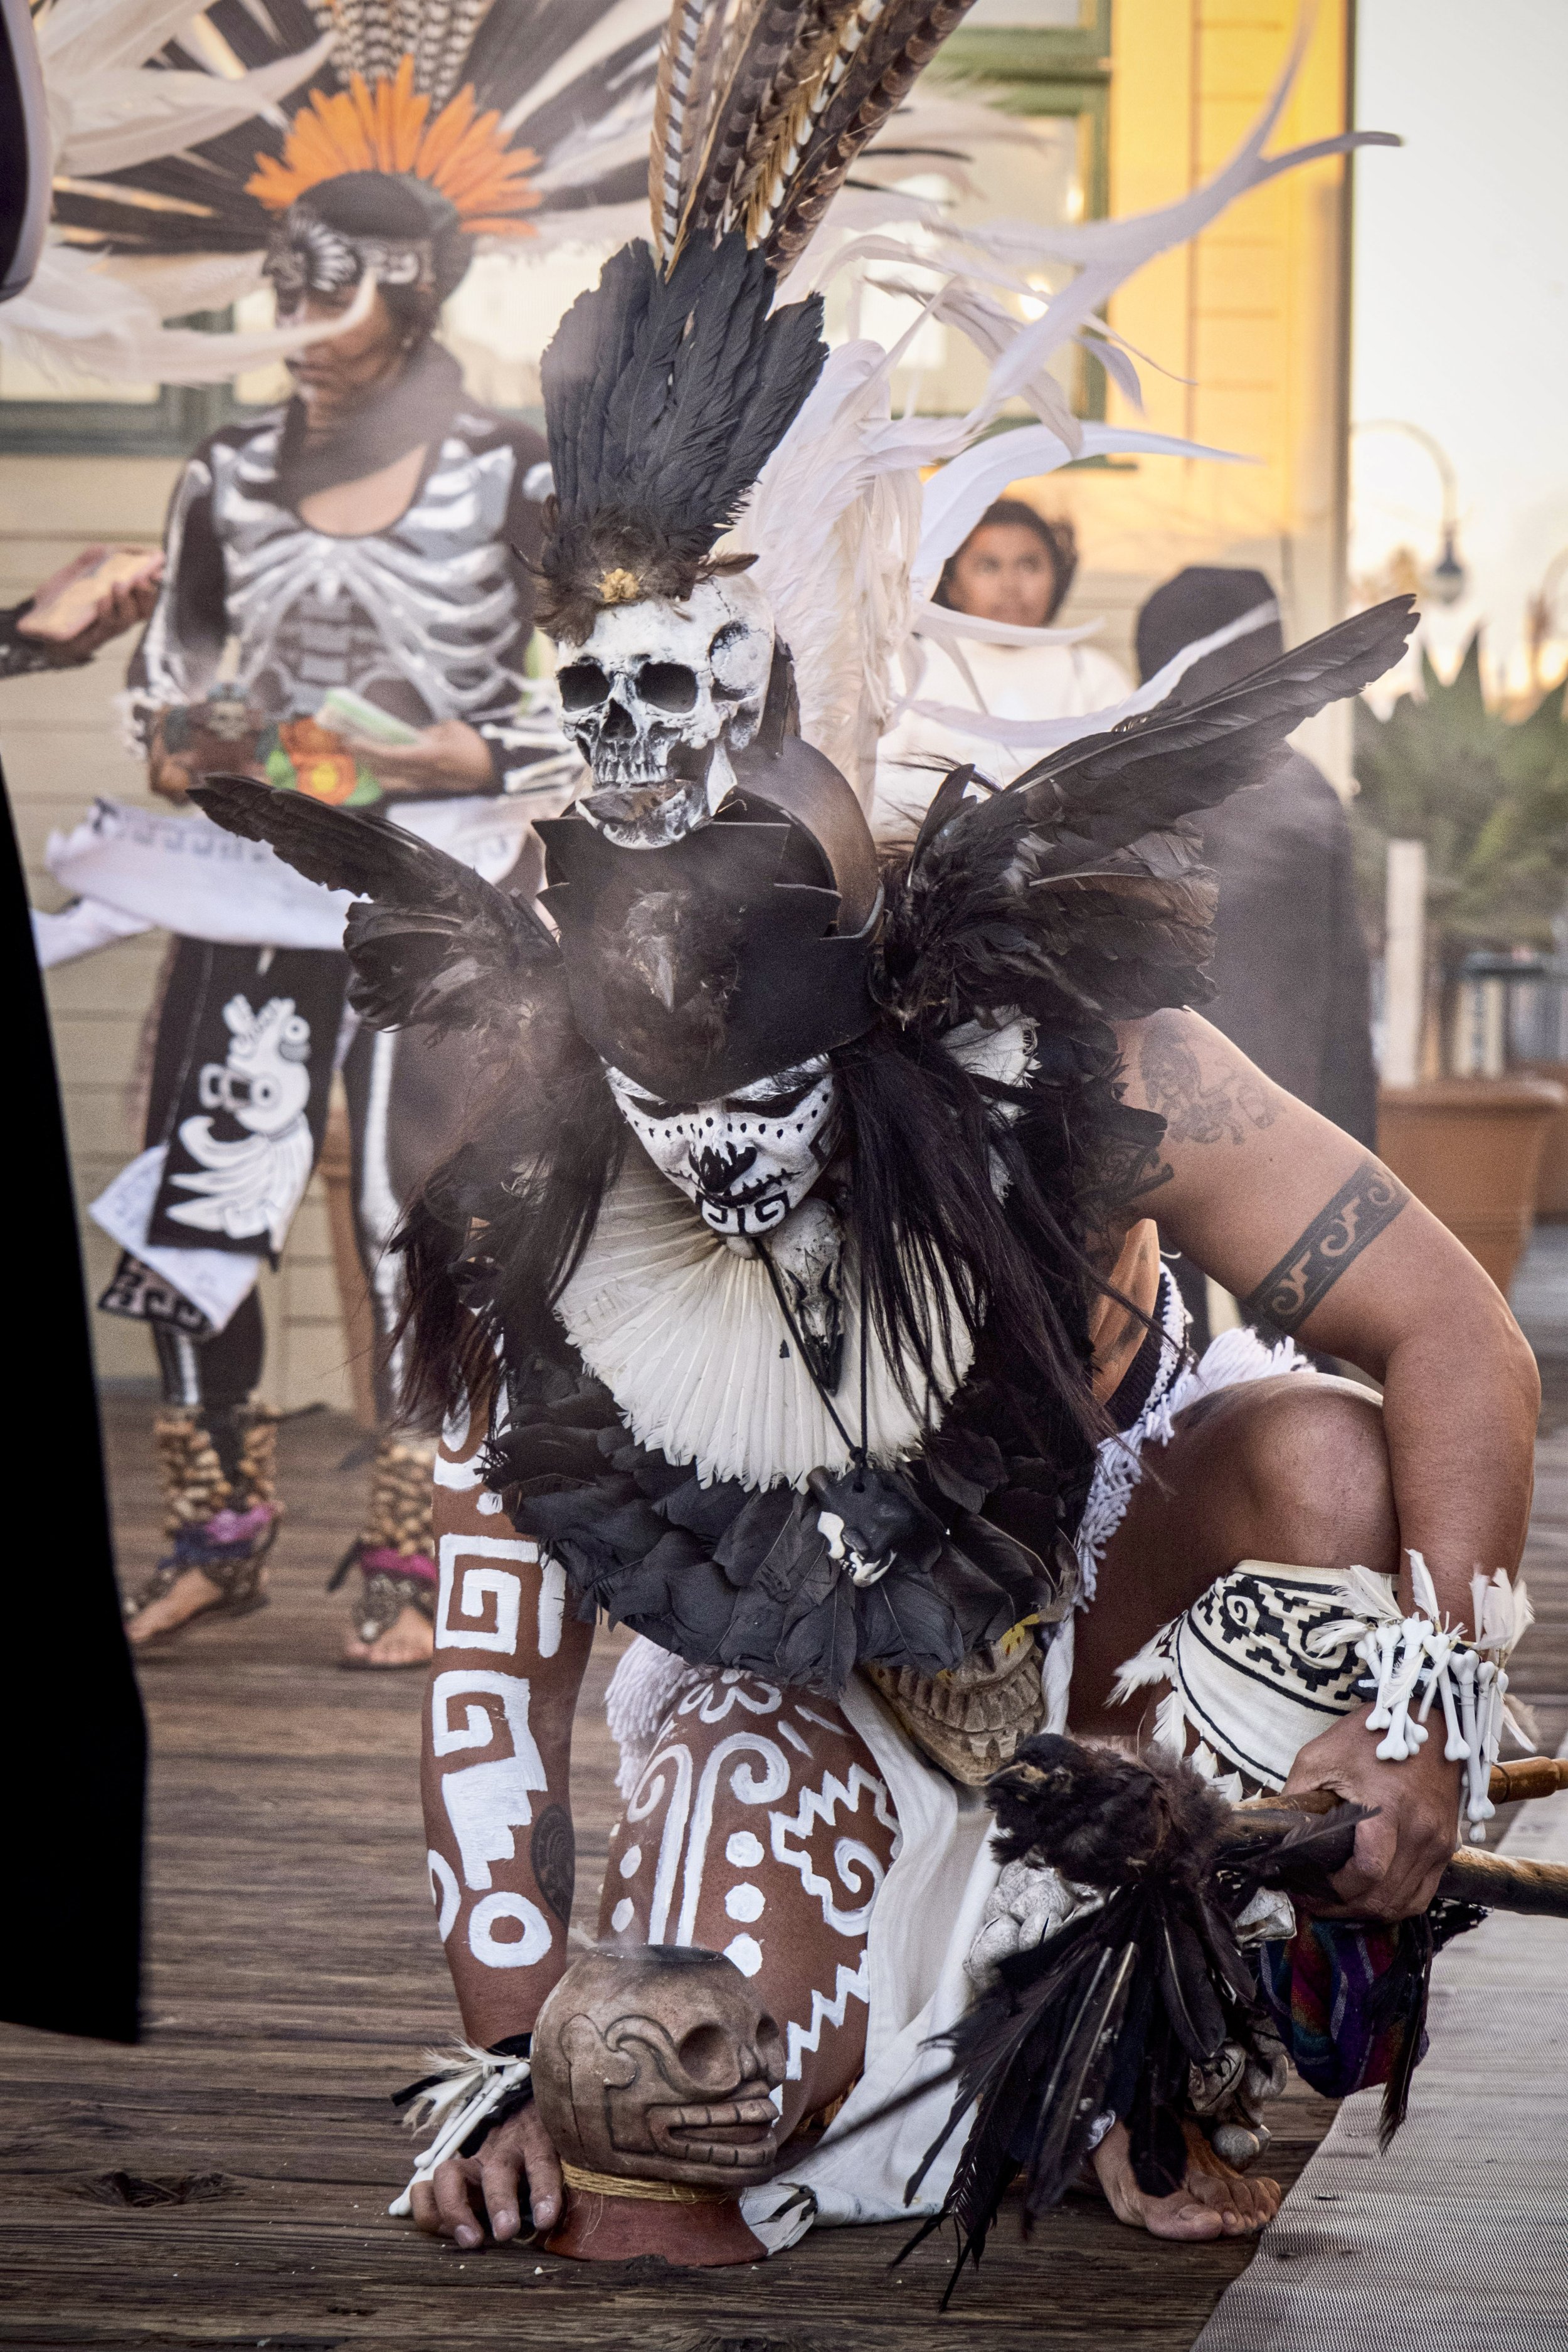  Tzinacantli burns ceremonial materials for celebration of Dia de Los Muertos on the Santa Monica Pier on November 2. Natives from the Tongva tribe joined Aztec members of the Kalpoli Tonelhuayo circle at the west end of the Santa Monica Pier. “We bu